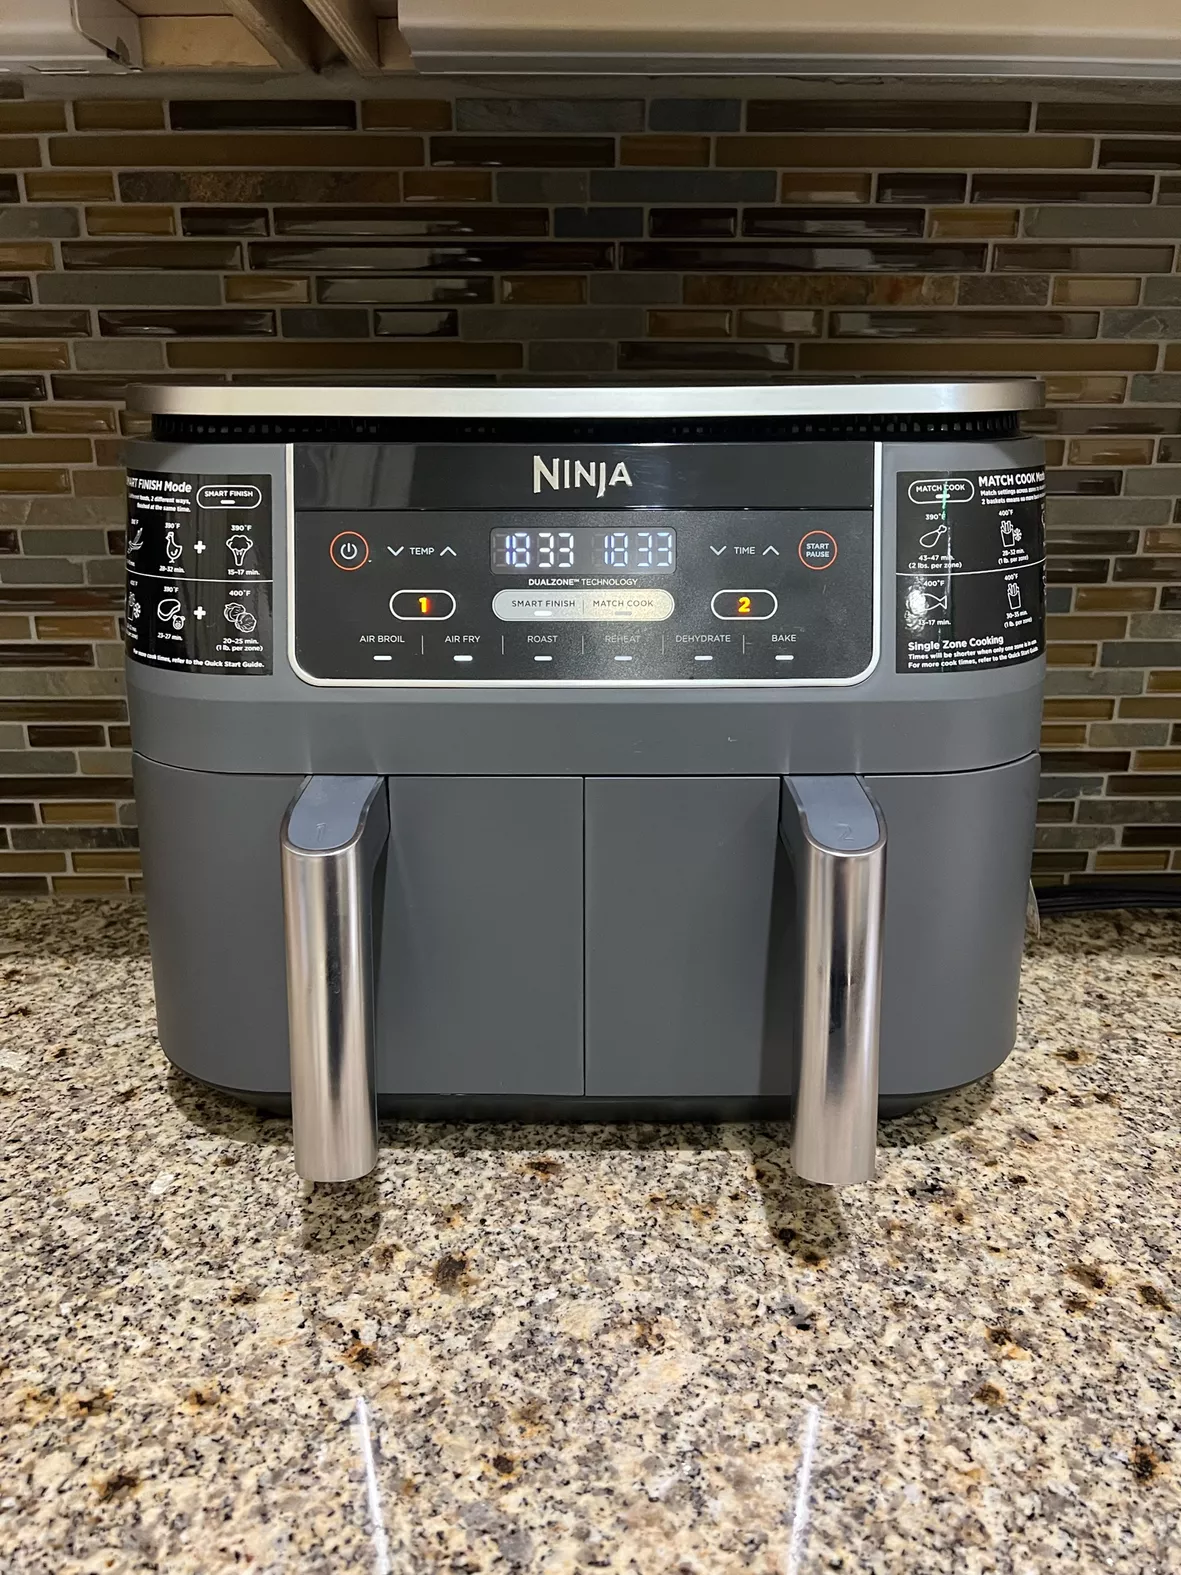 Ninja DZ401 Foodi 6-in-1 XL 2-Basket Air Fryer review: Double the fun of a  regular fryer